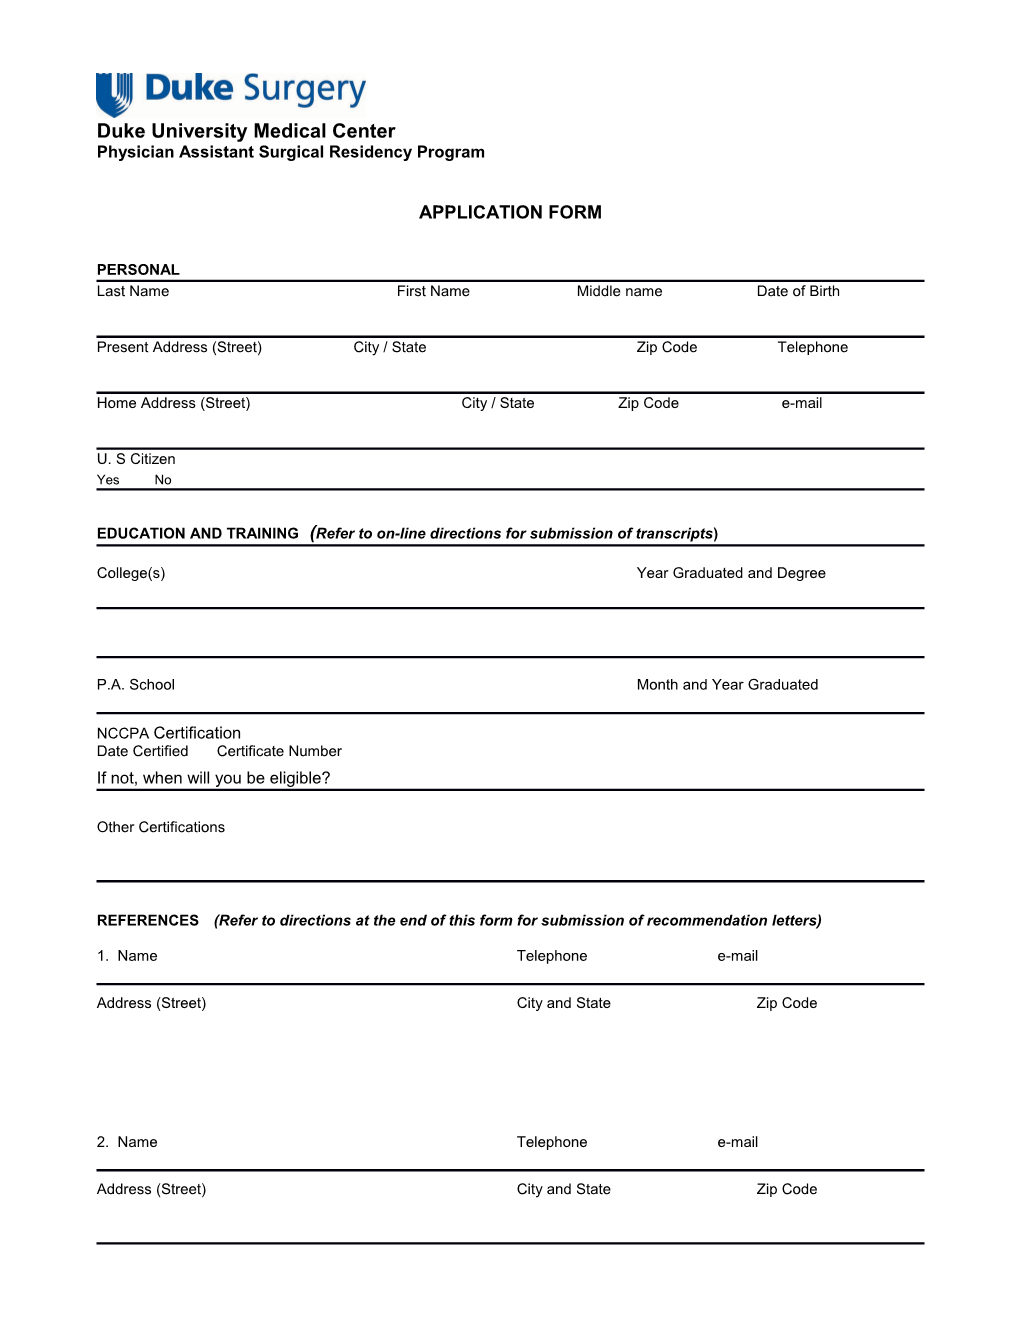 Applicant Evaluation Form